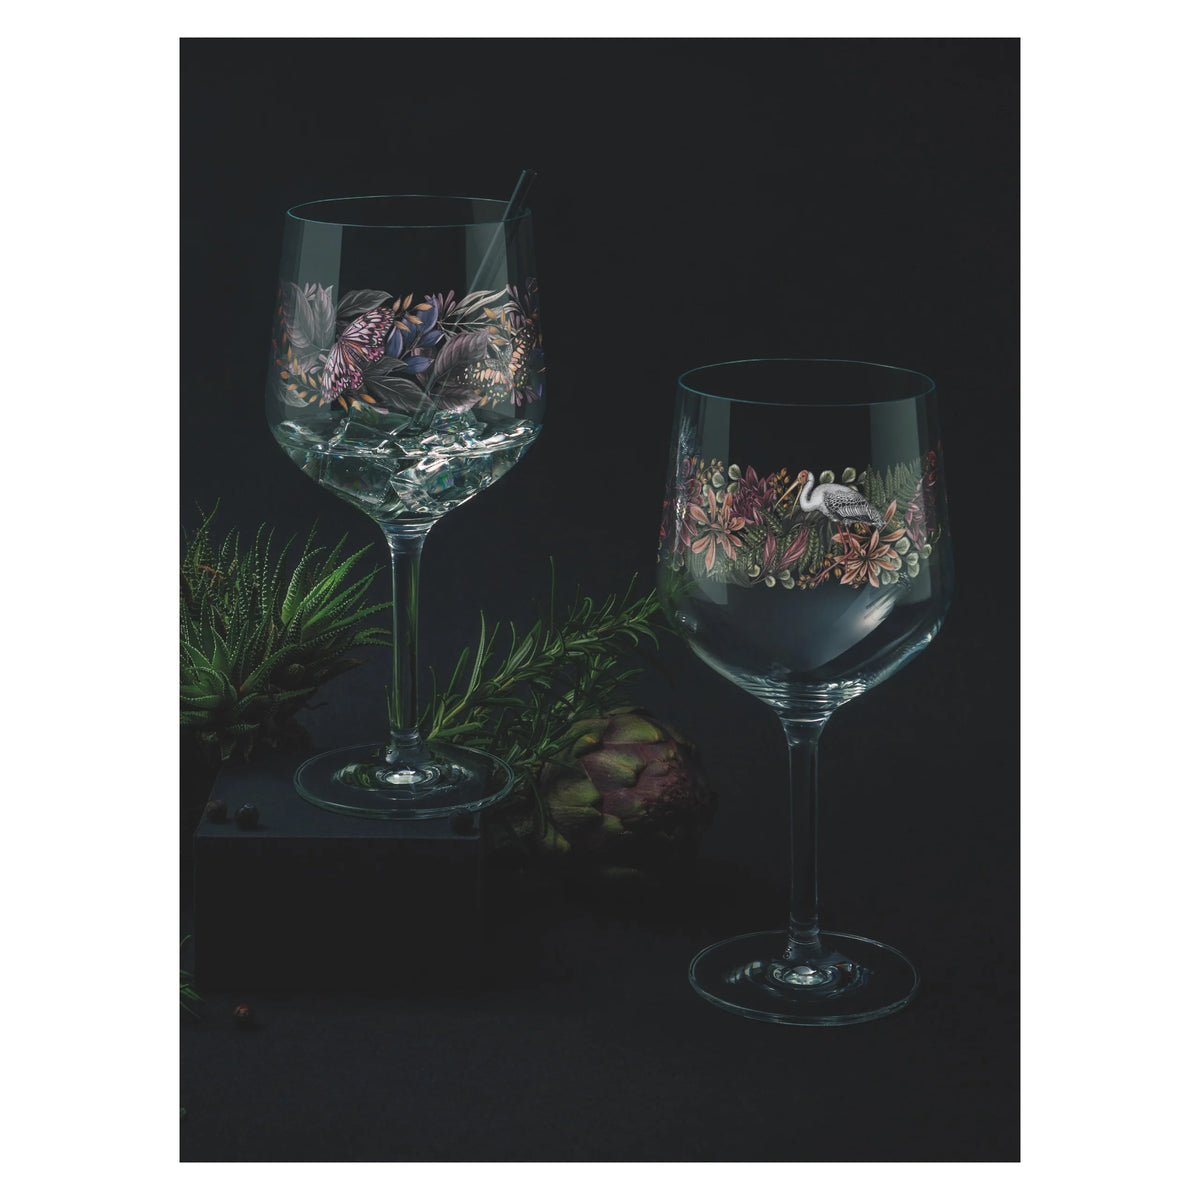 2 Ritzenhoff Gin and Summer Cocktail Glasses by designer: Maggie Enterrios 2021